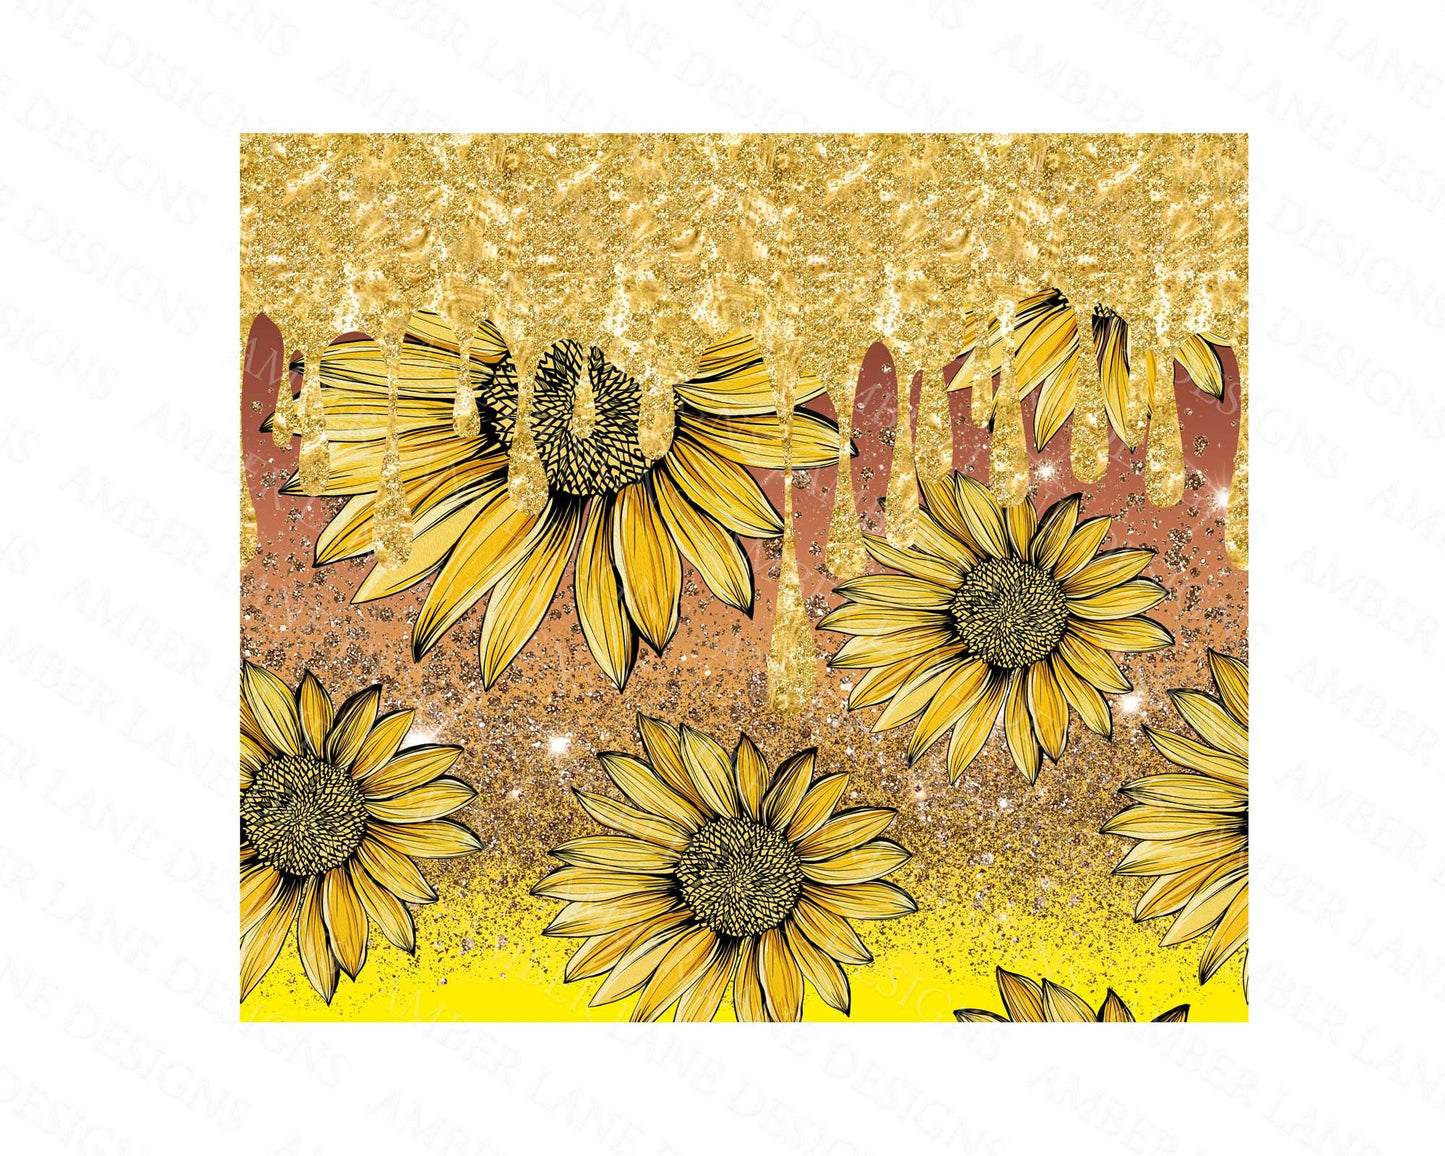 Sunflower Serenity: 20oz Skinny Tumbler in Straight Elegance Golden Bloom Bliss Harvest Sunshine Petals and Sips ields of Gold 1 jpeg file